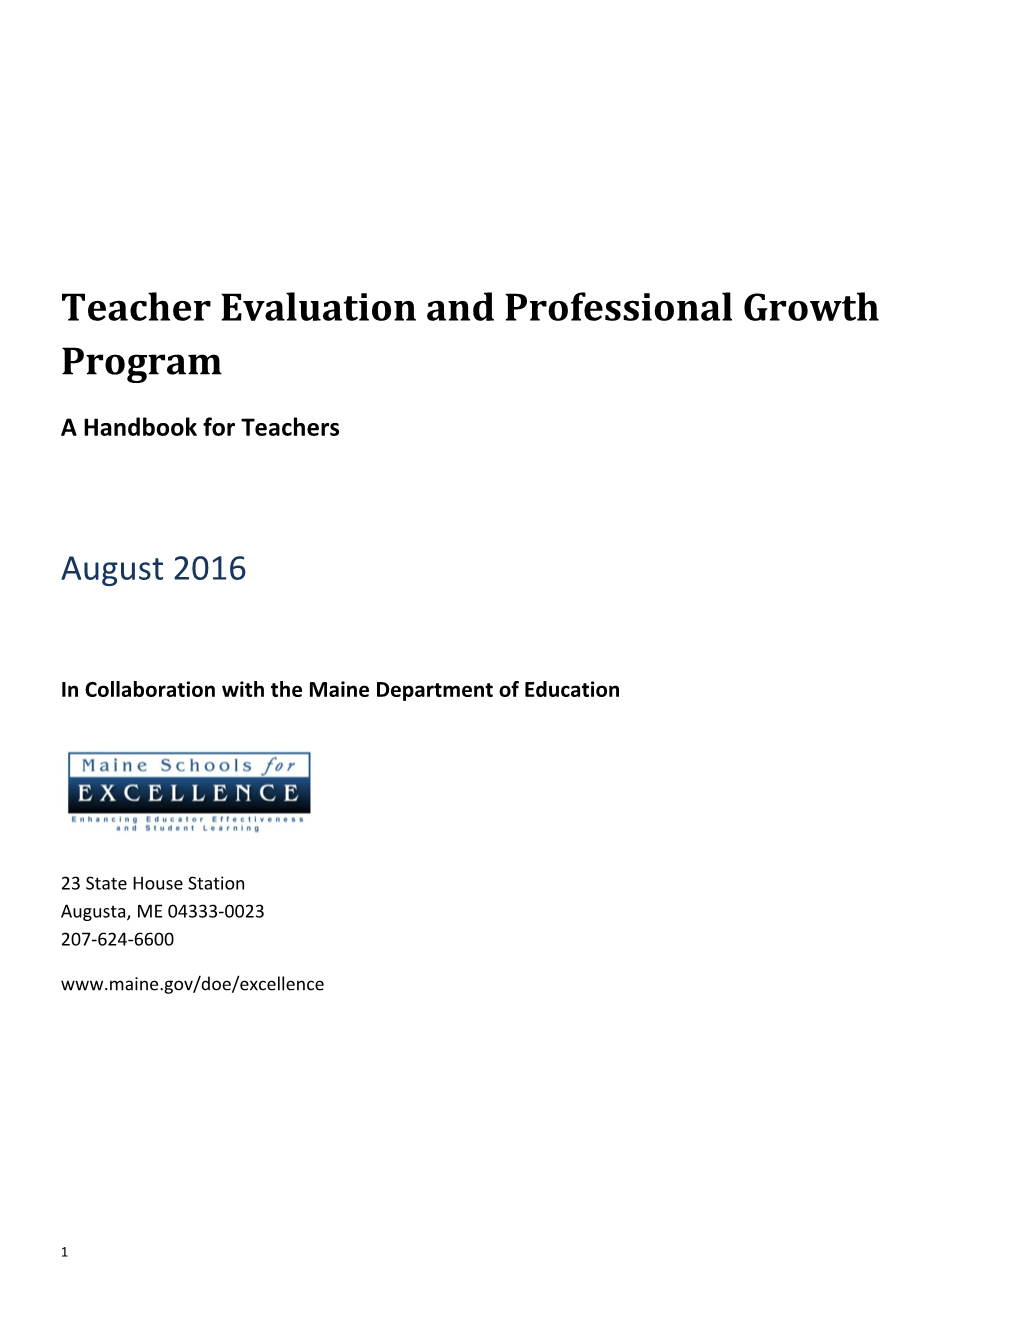 Teacher Evaluation and Professional Growth Program